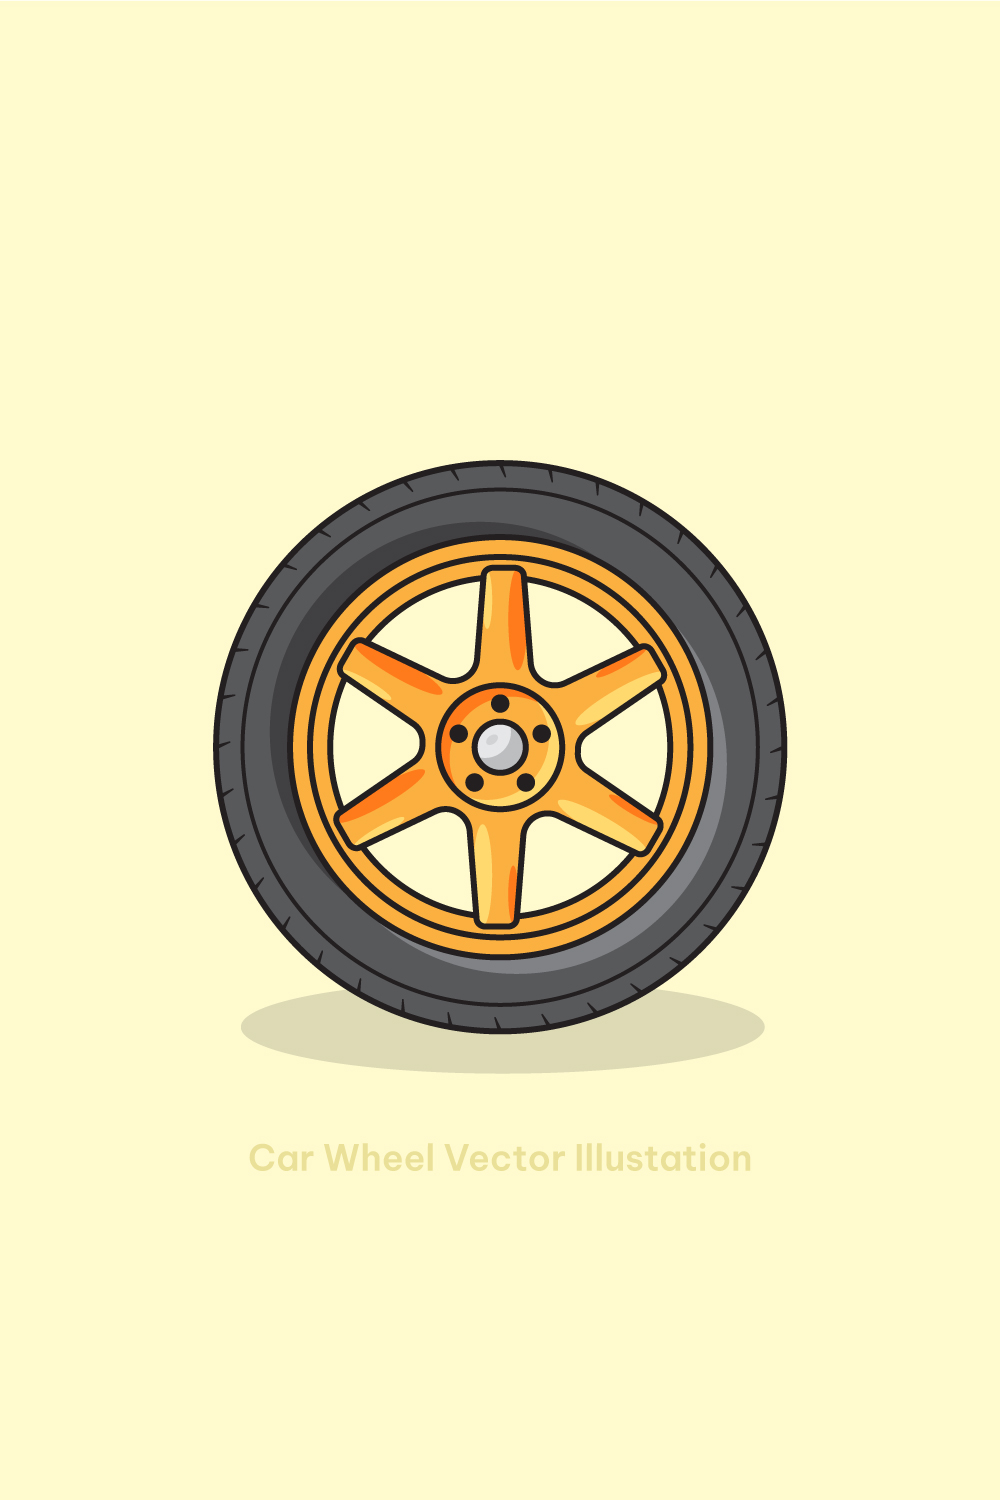 Car Wheel Vector Illustration.